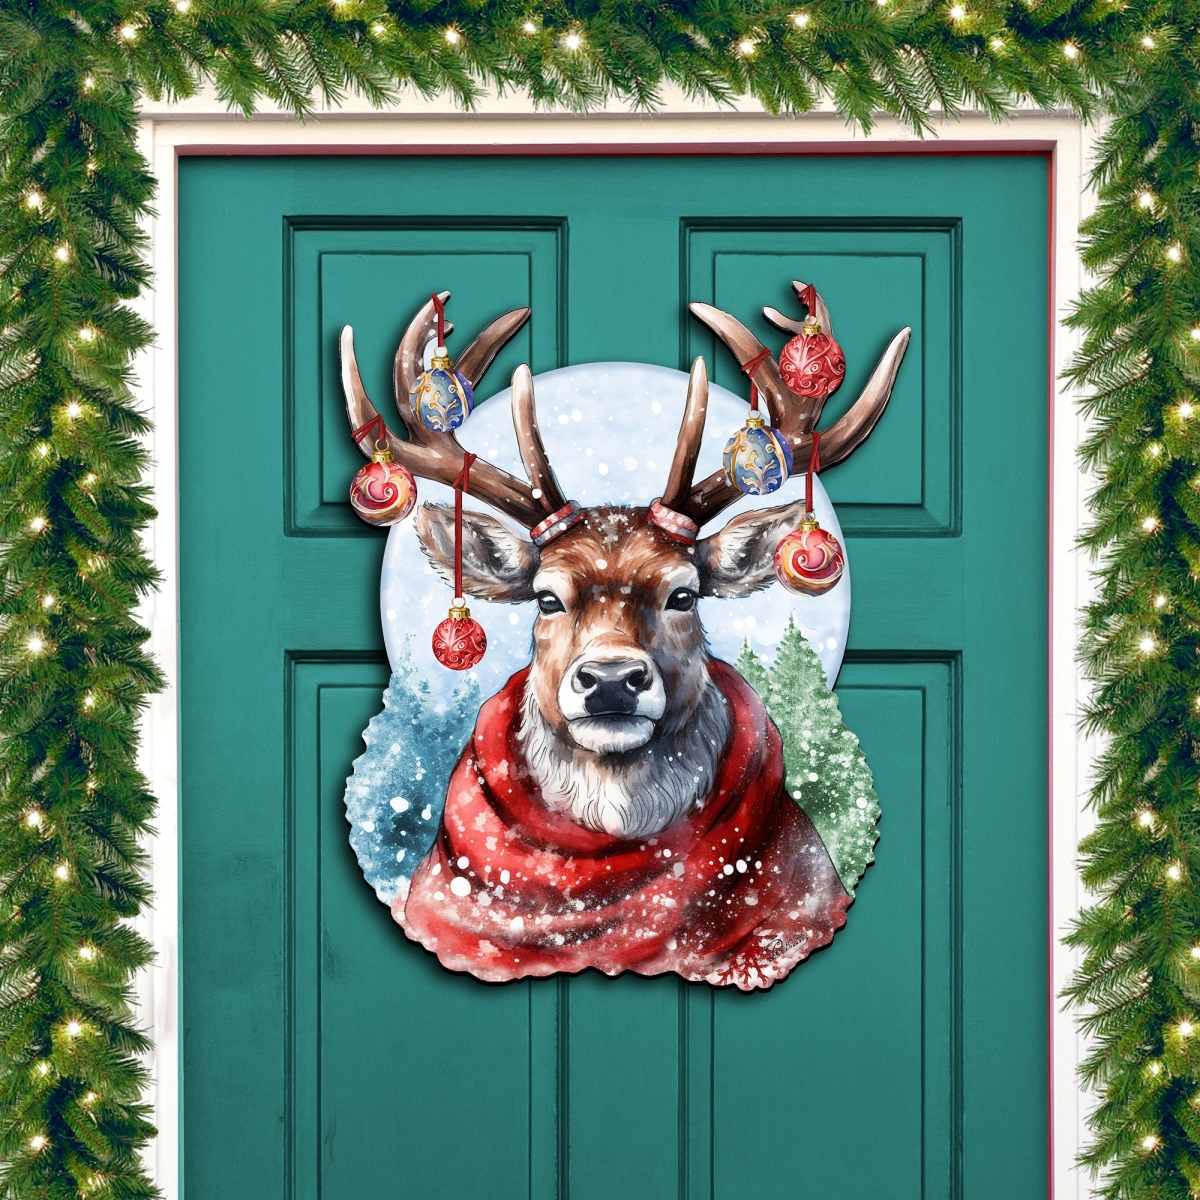 Clean Choice 24 x 18 in. Christmas Mood Holiday Christmas Door Decor